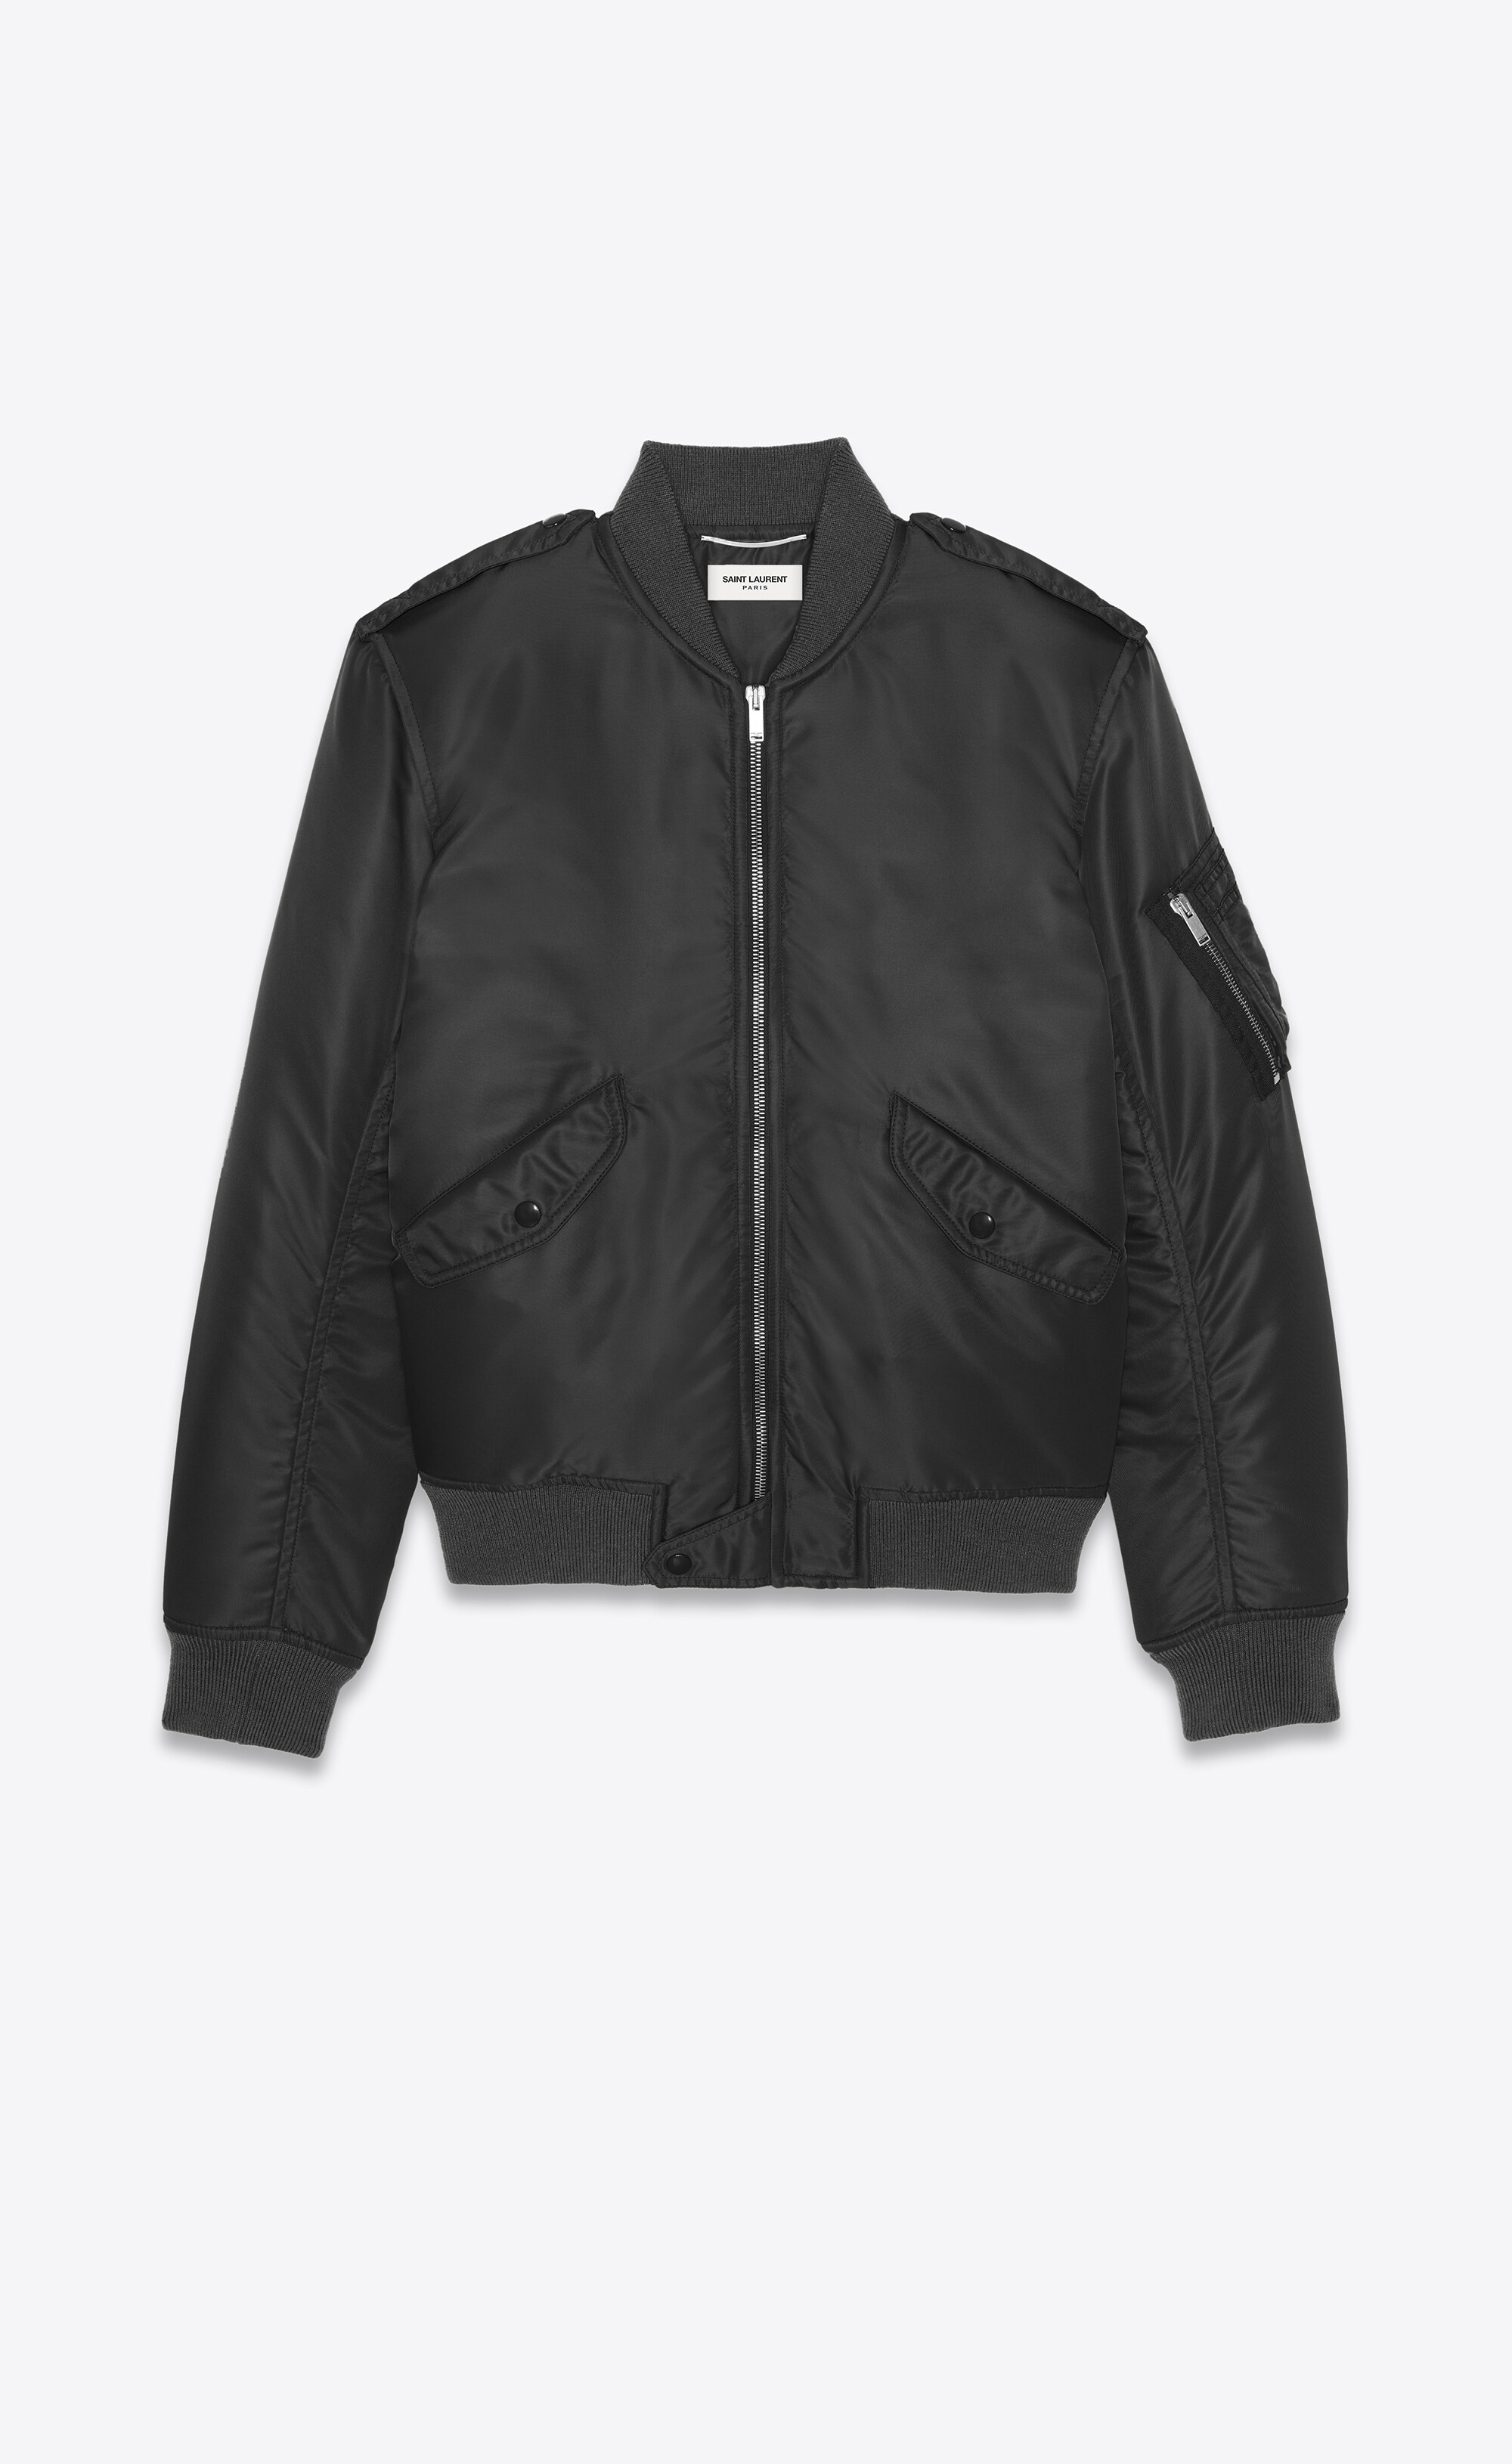 Saint Laurent Black Glitter Detail Leather Jacket, Brand Size 50 612156  Y1A03 1081 - Apparel - Jomashop